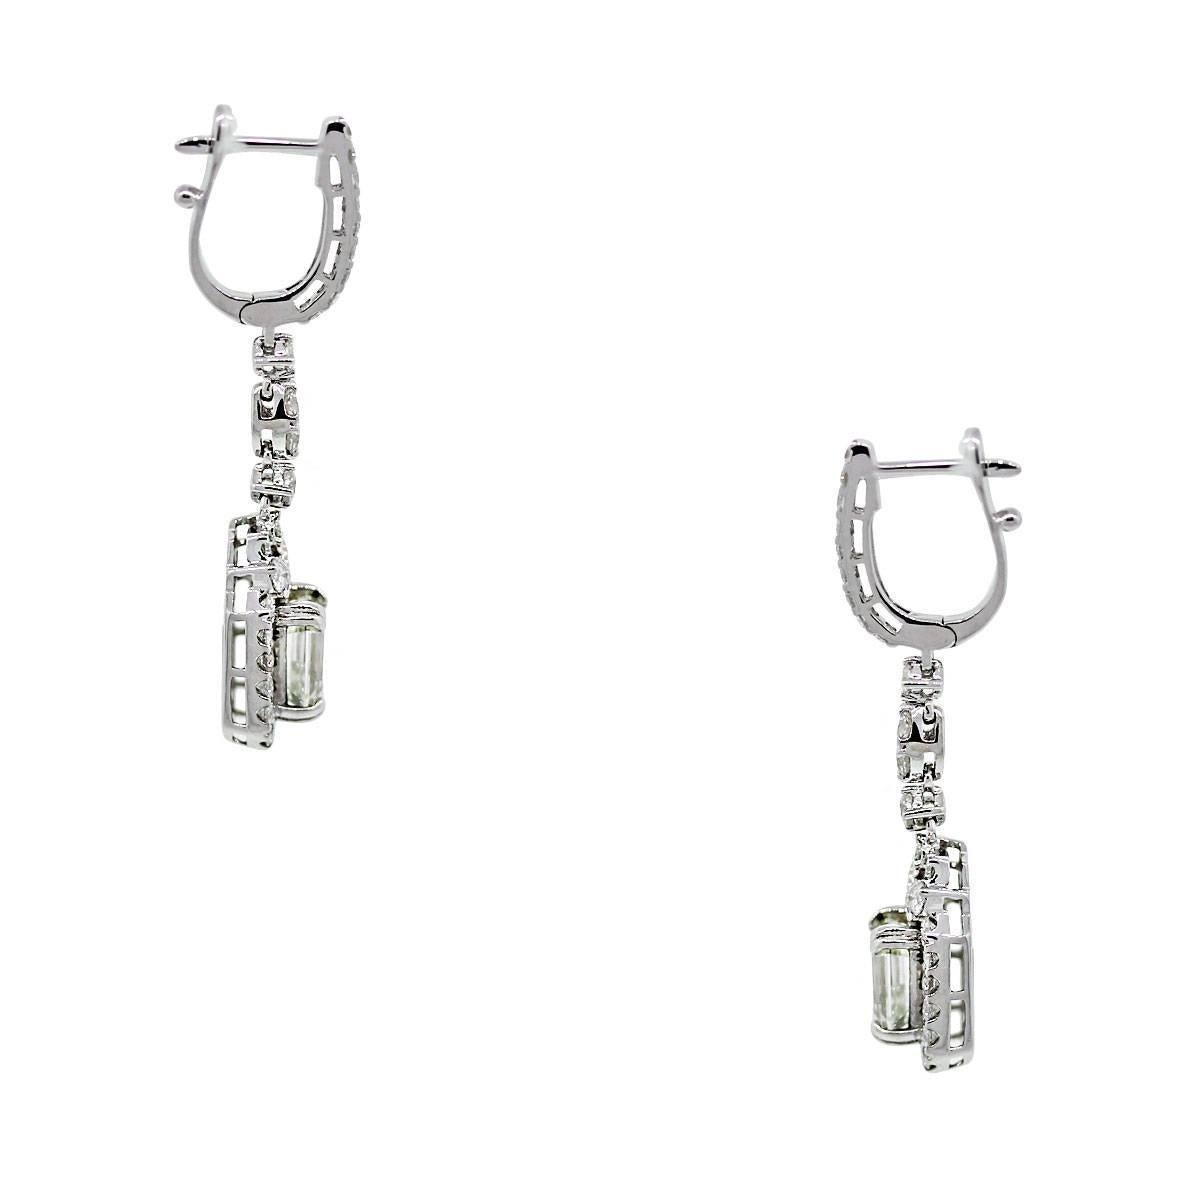 Style	: 18k White Gold 3.37ctw Emerald Cut Diamond Dangle Earrings
Material: 18k White Gold
Earring Measurements: 1.5